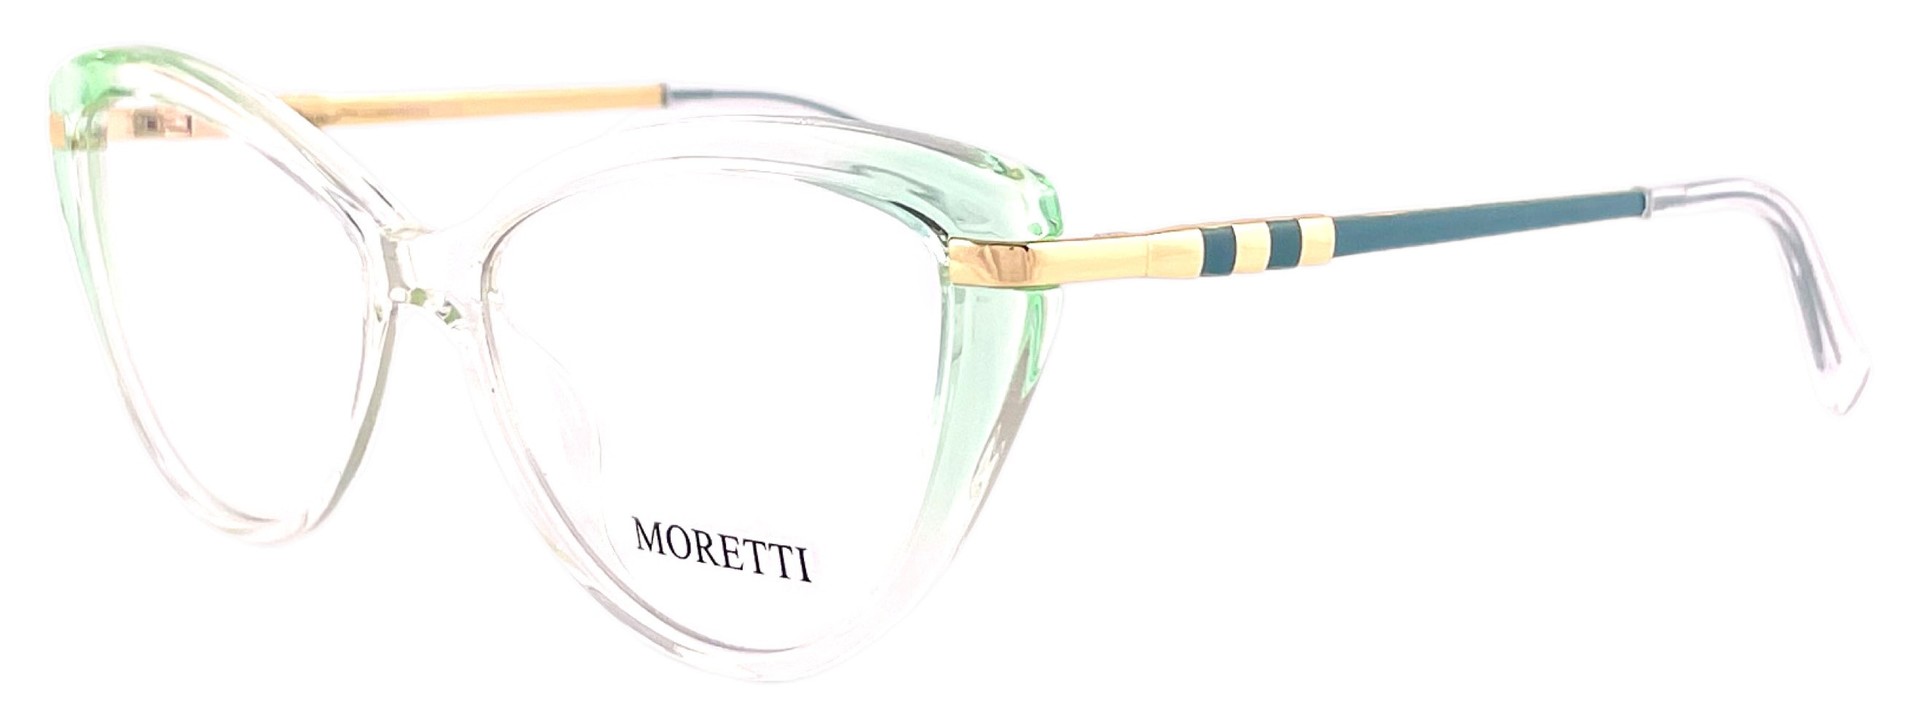 Moretti 2111 C2 2